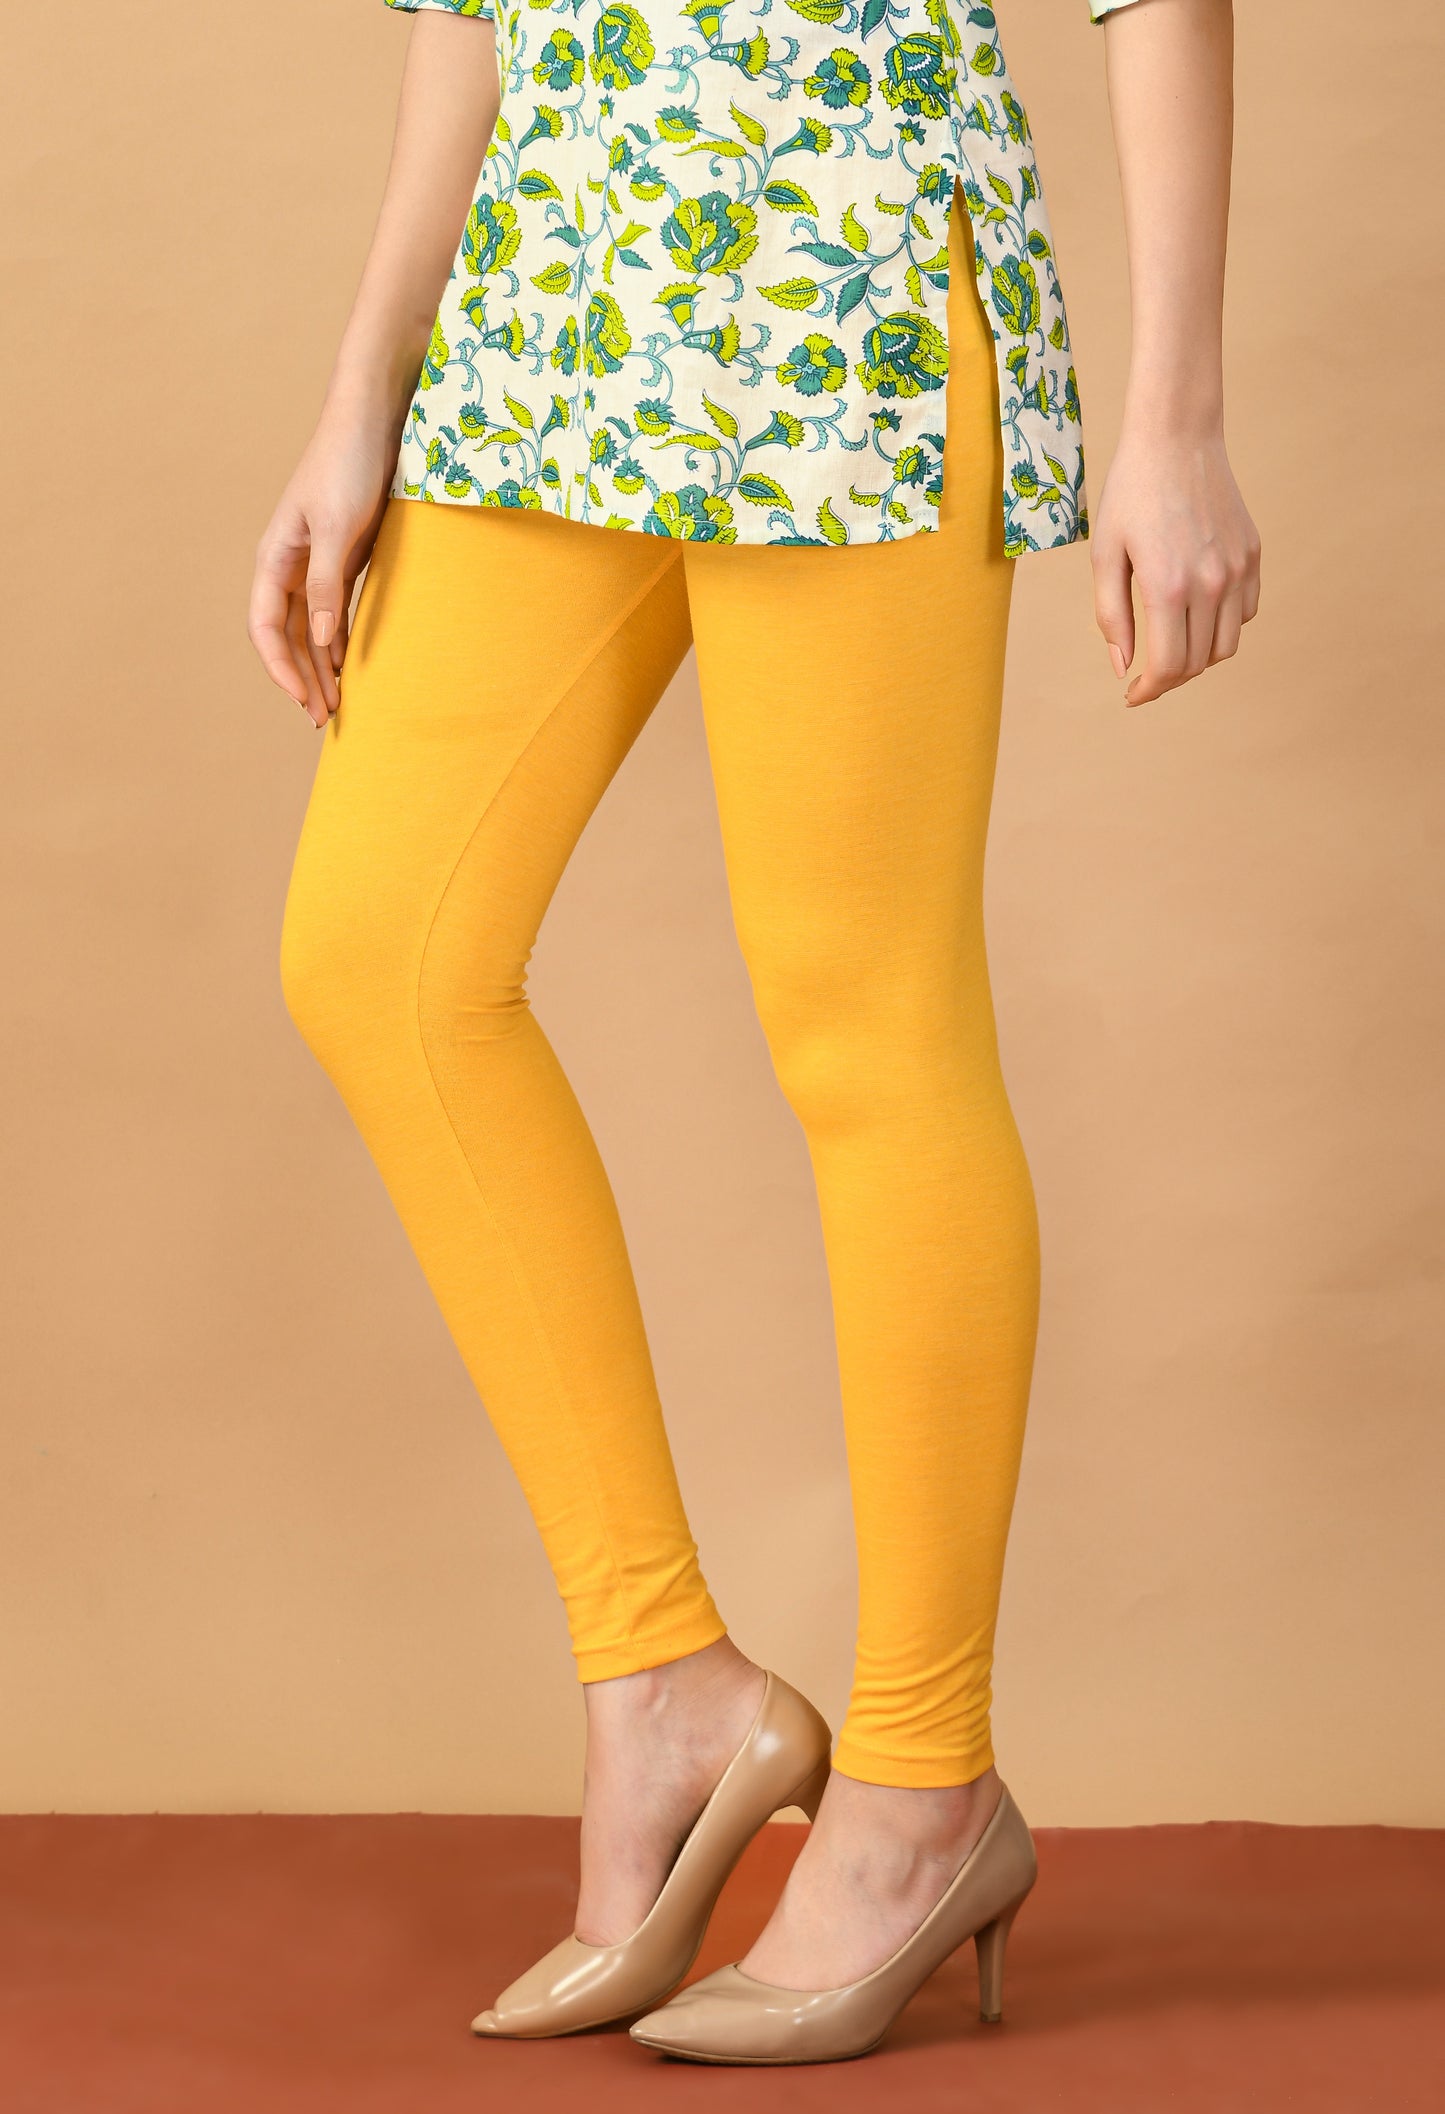 Sunshine Yellow Ankle-Length Cotton Leggings#21